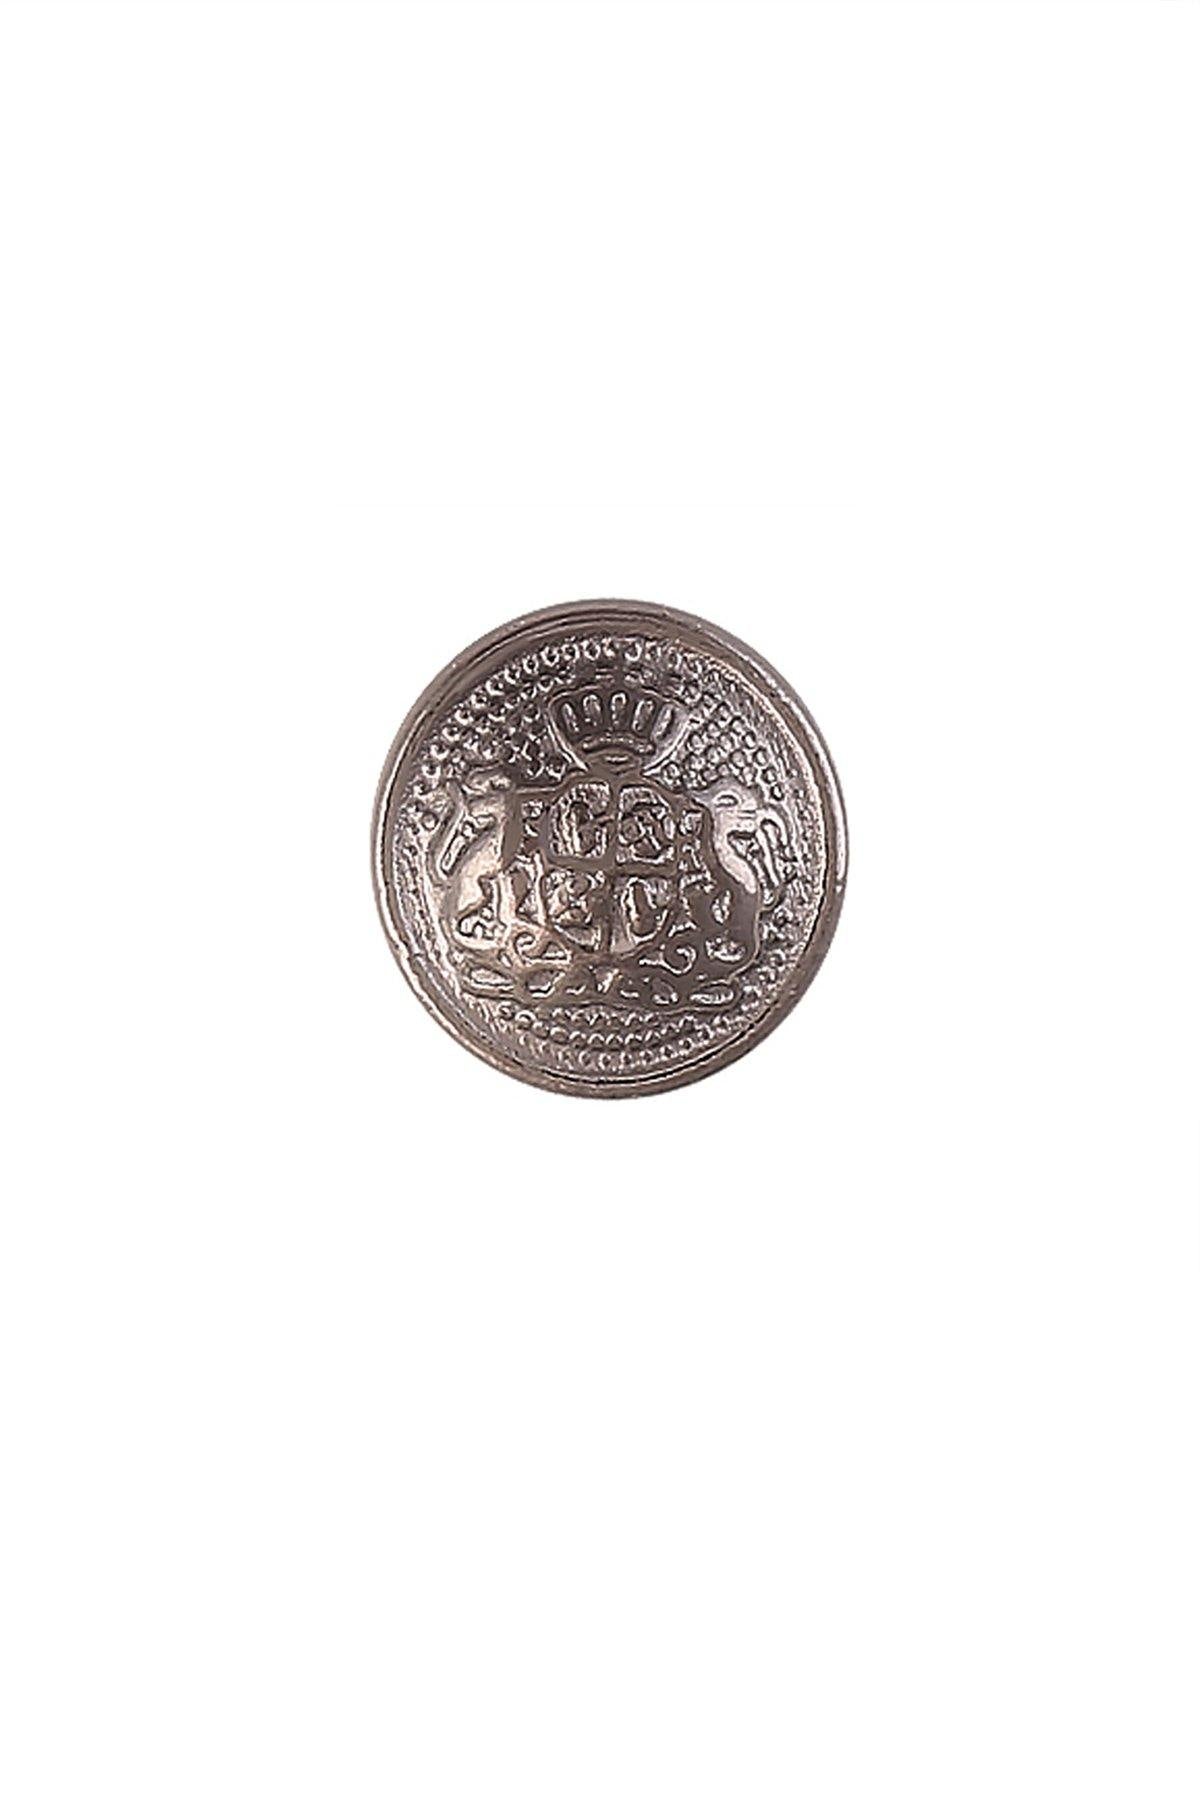 Engraved Design Round Shape Downhole Loop Metal Button in Black Nickel (Gunmetal) Color